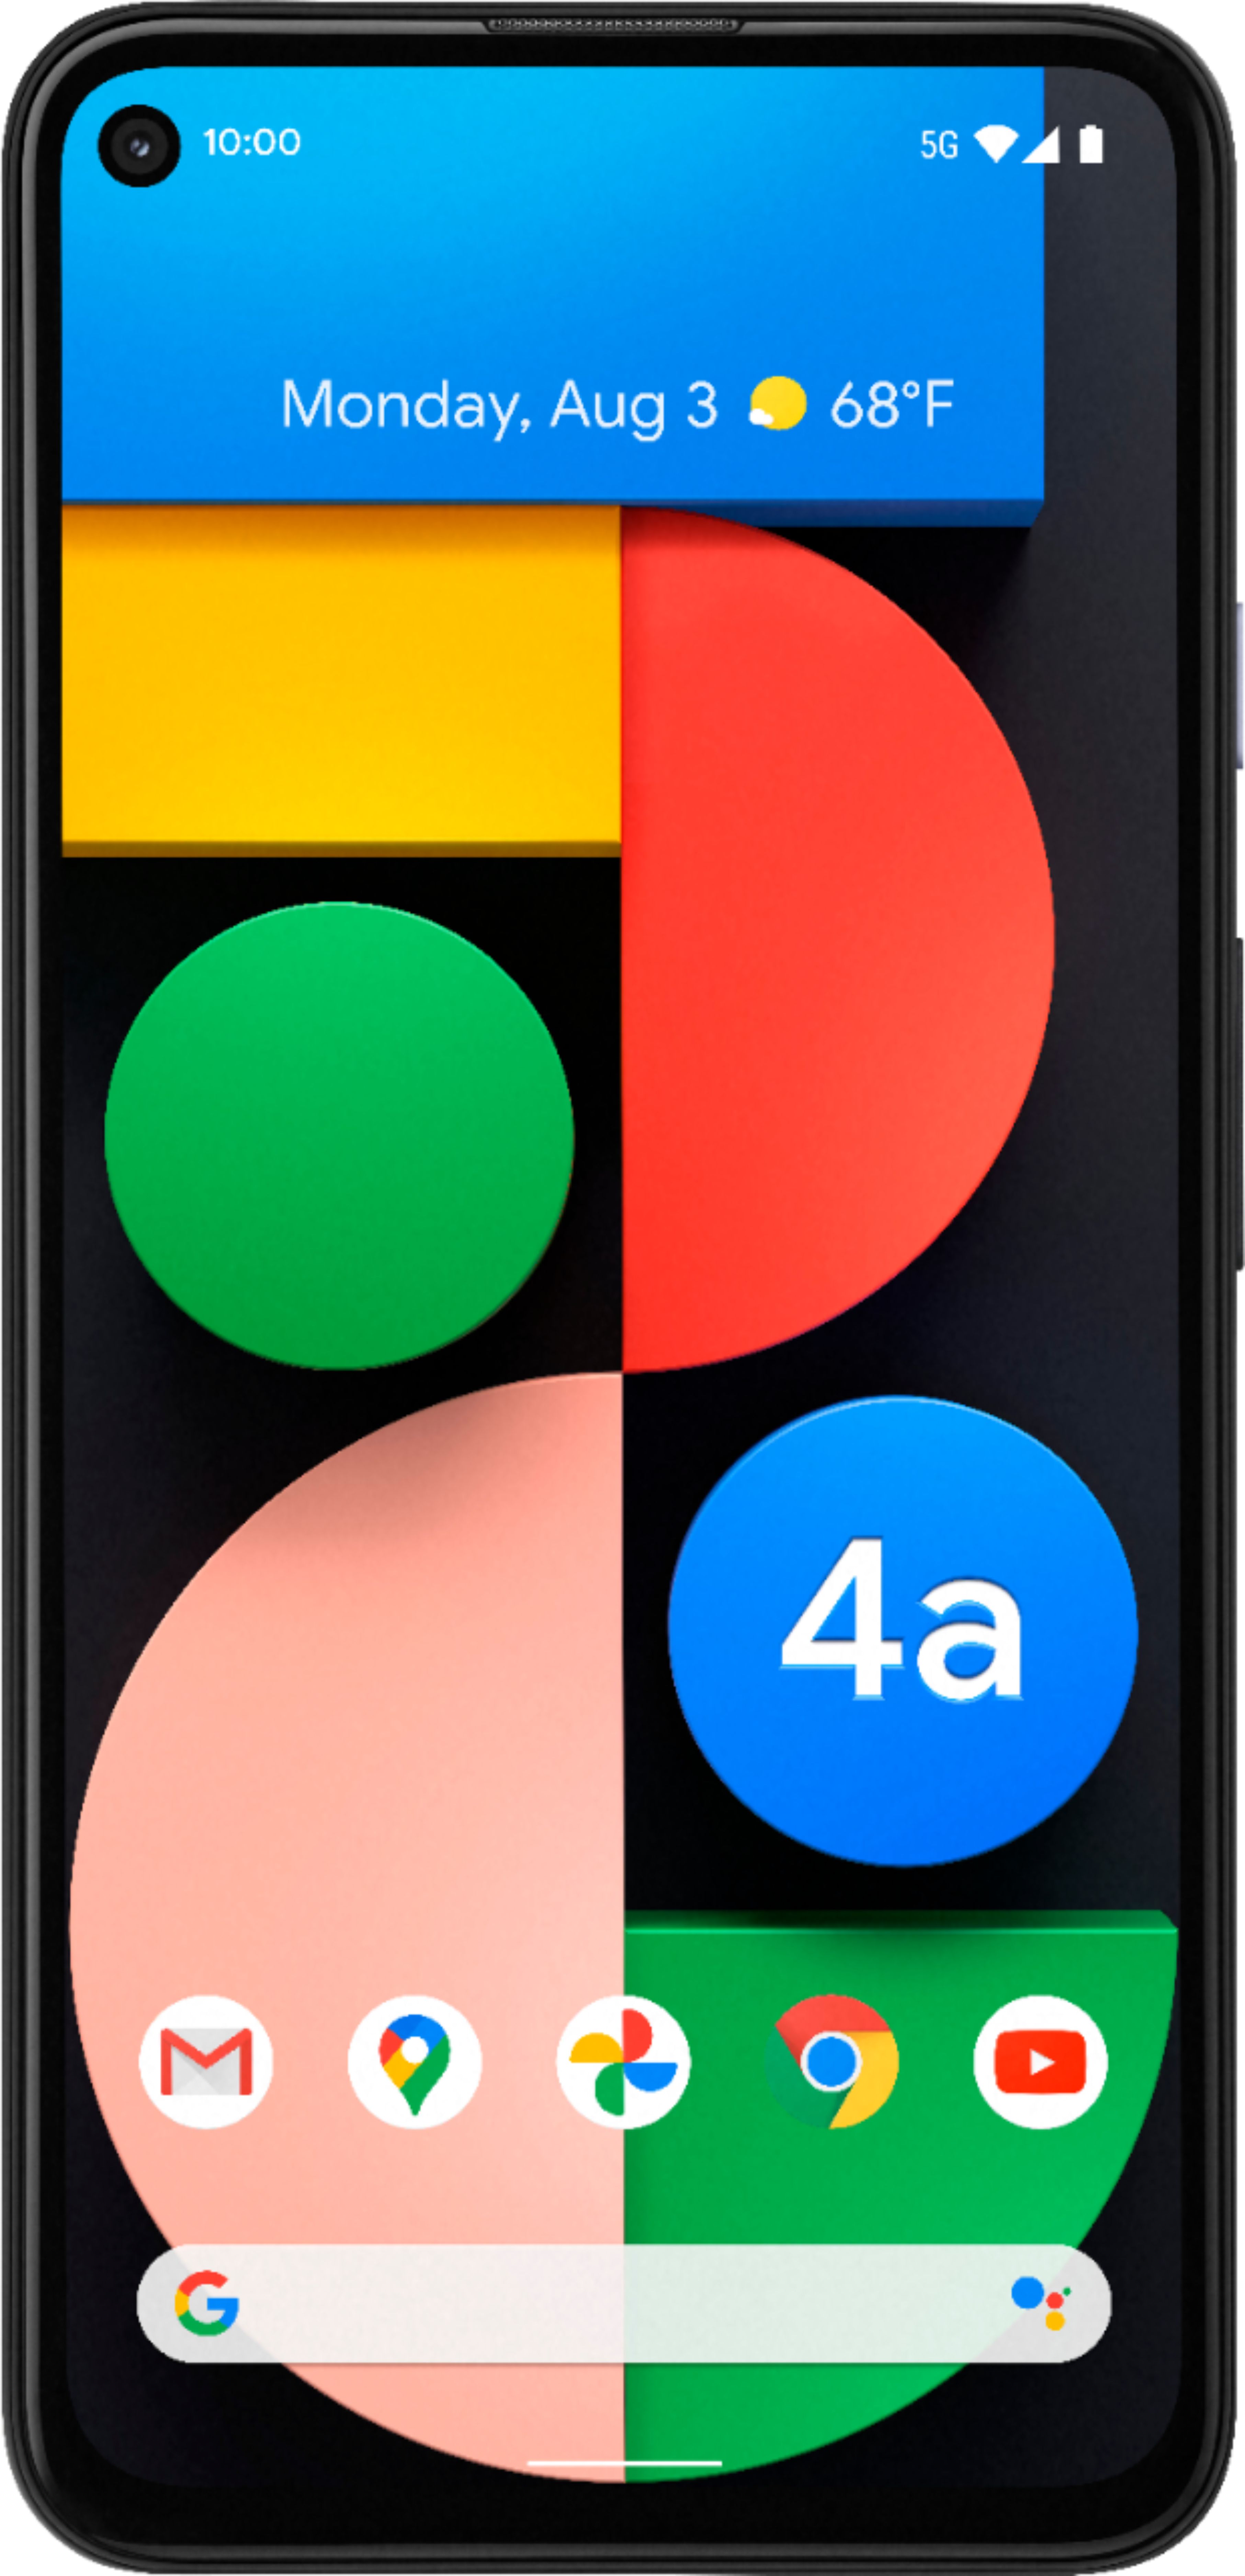 Best Buy: Google Pixel 4a with 5G Just Black (Unlocked) GA02293-US